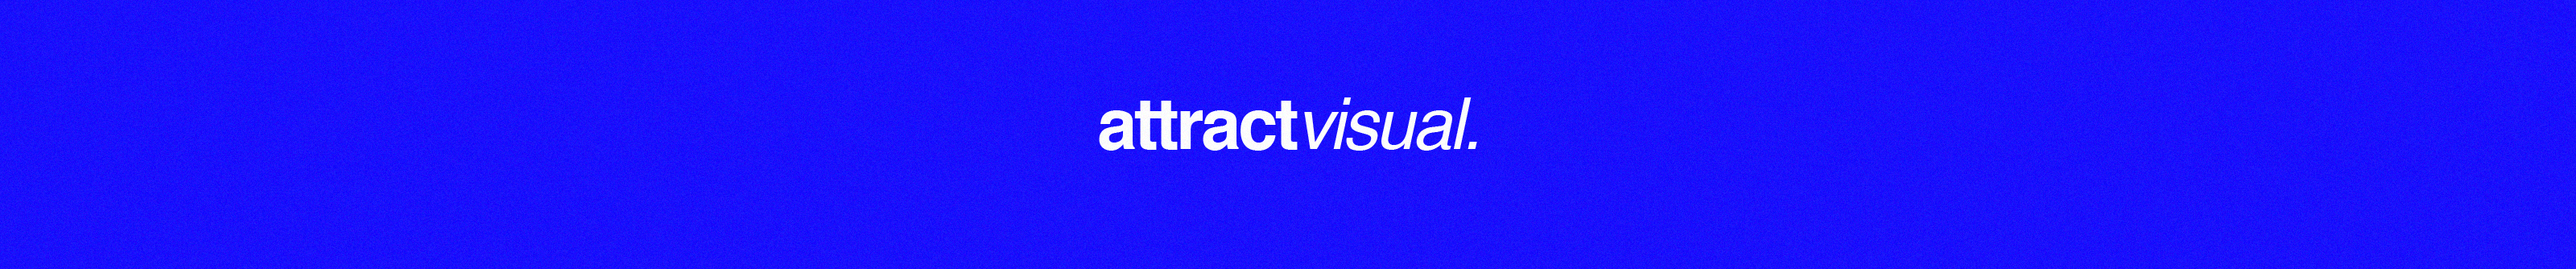 Attract visuals profilbanner